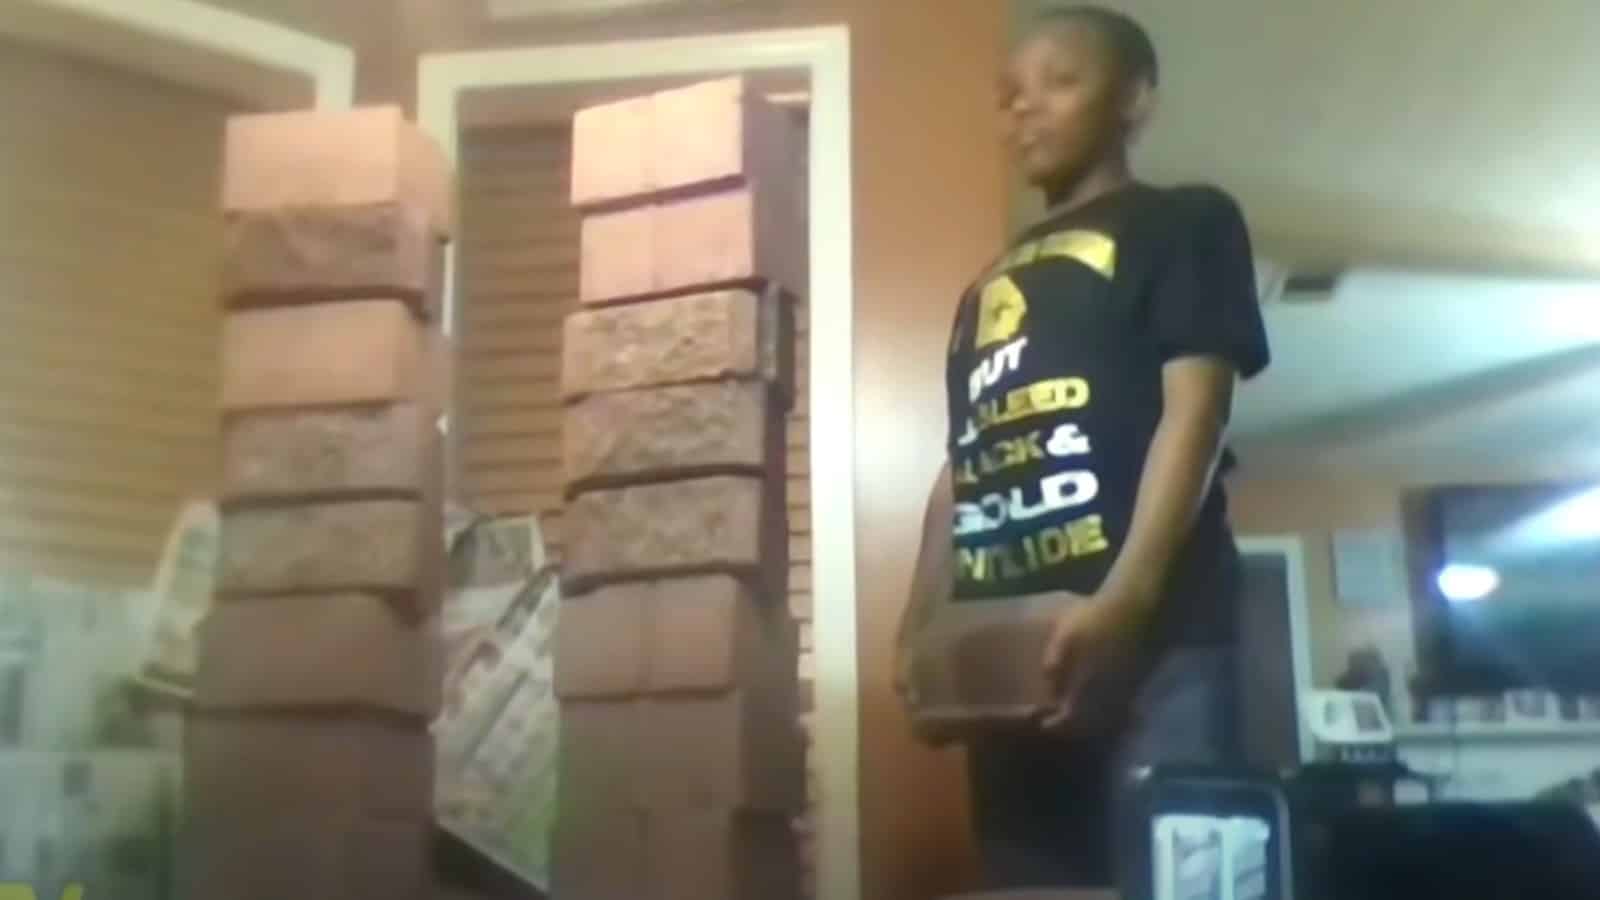 Boy stands next to stacks of bricks